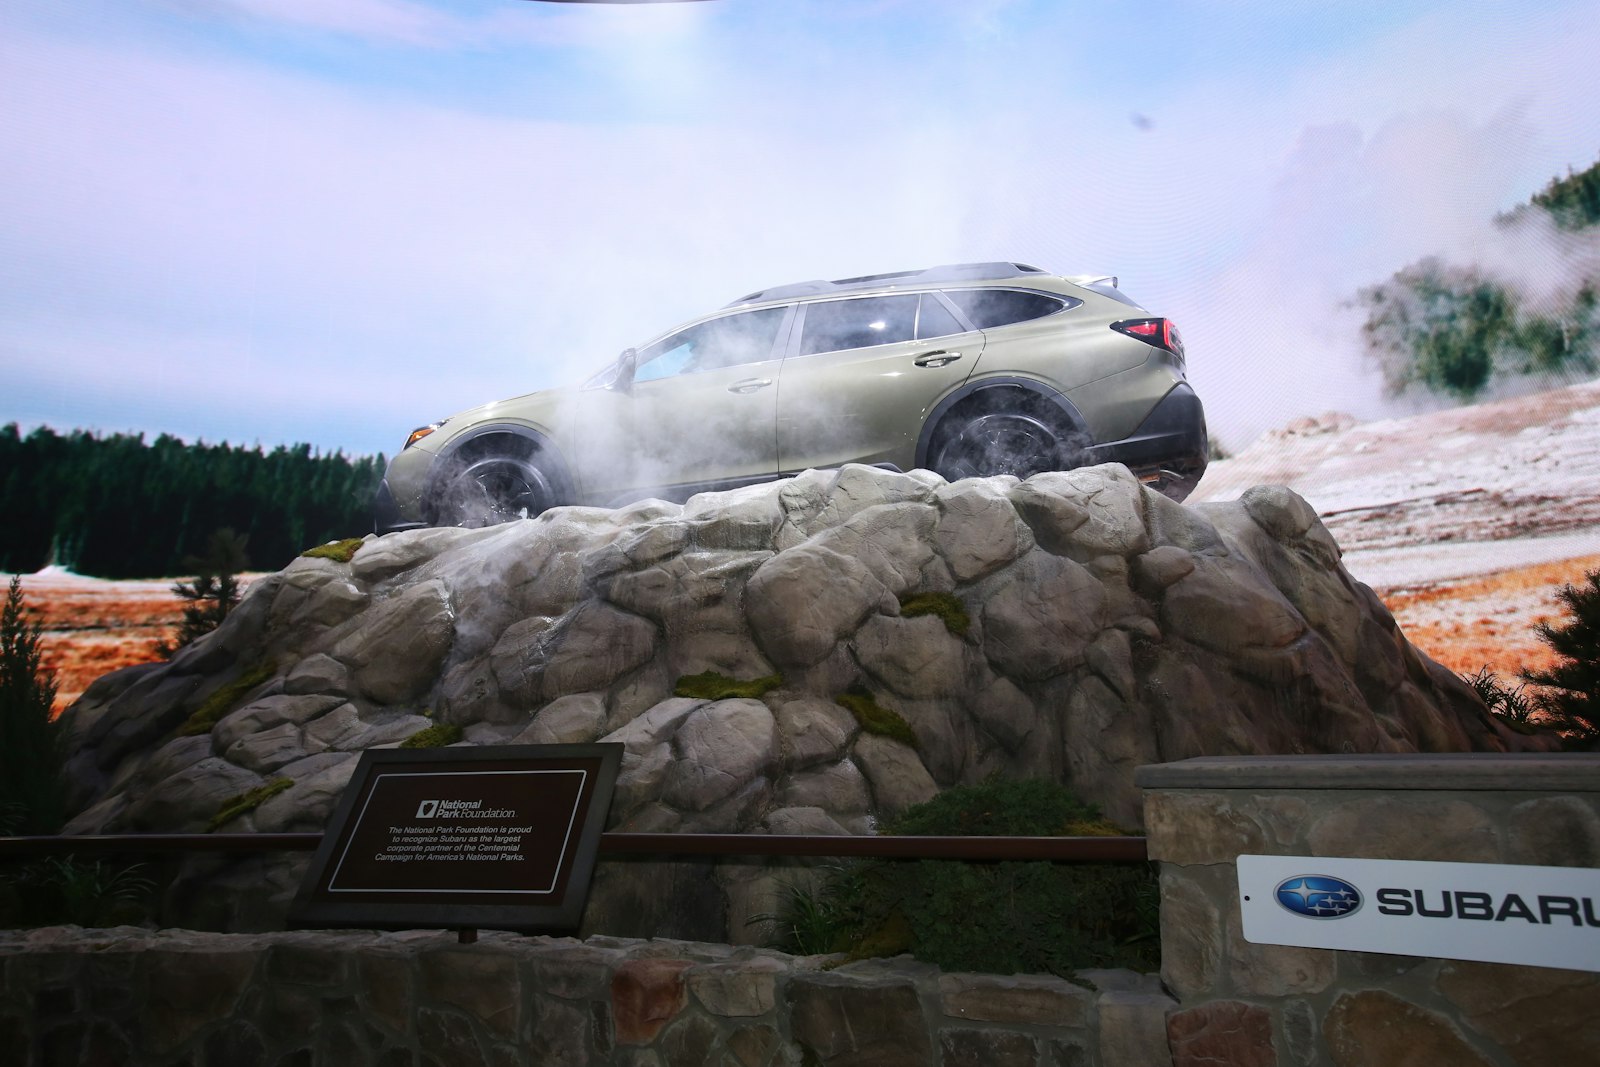 Display showcasing a new car model. A car perched atop a model of a geyser